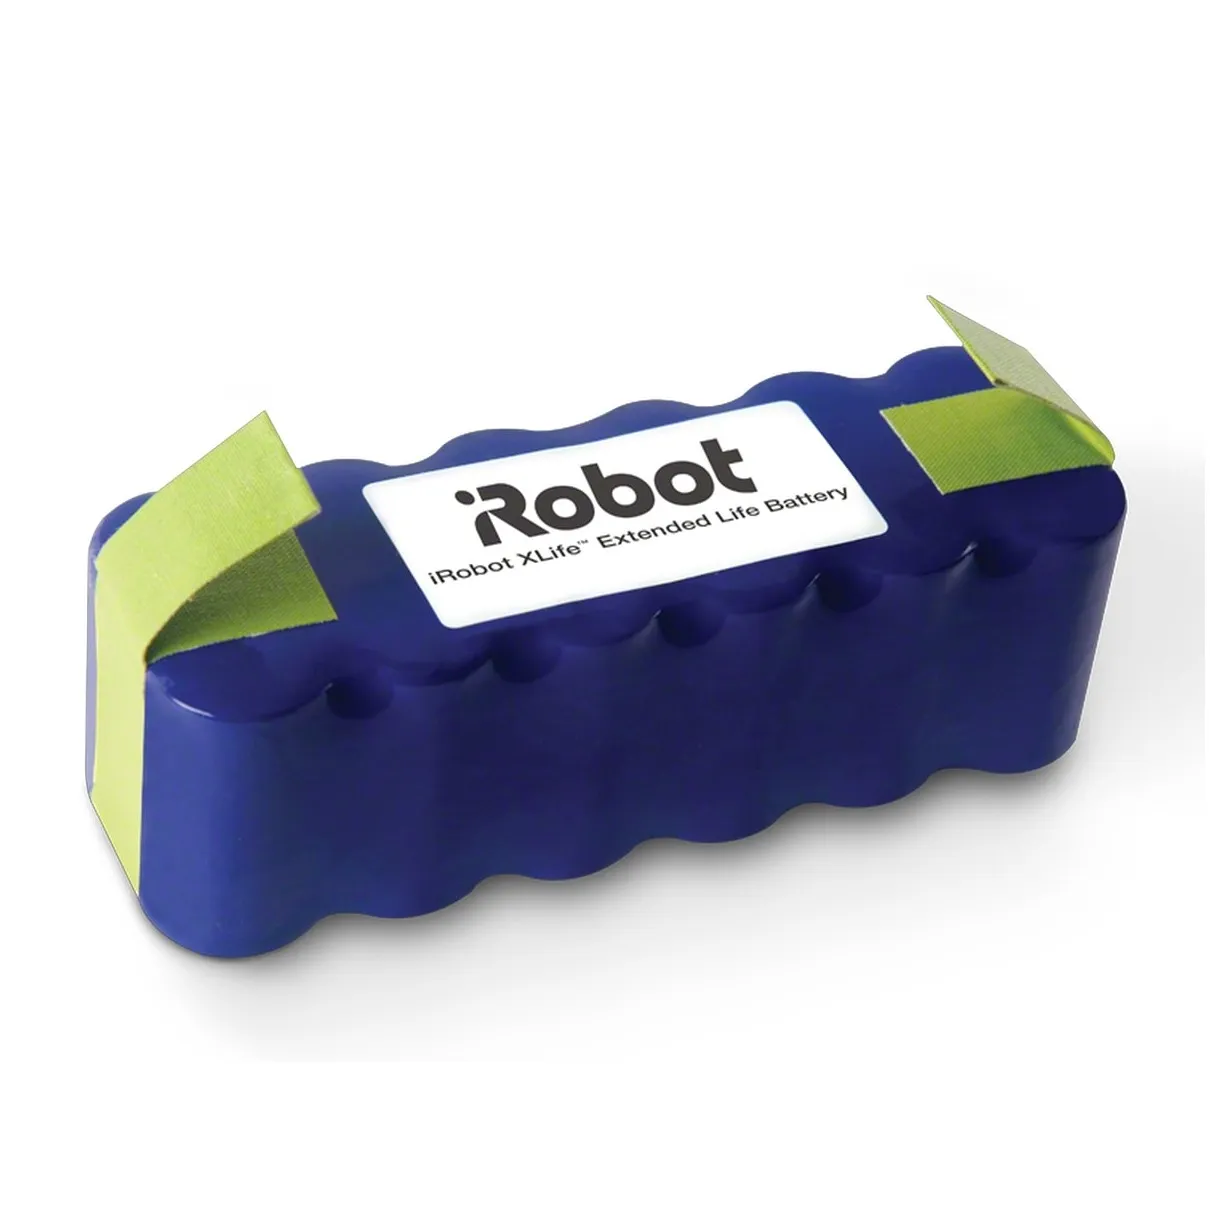 Irobot X Life 3000mAh NiMH Battery